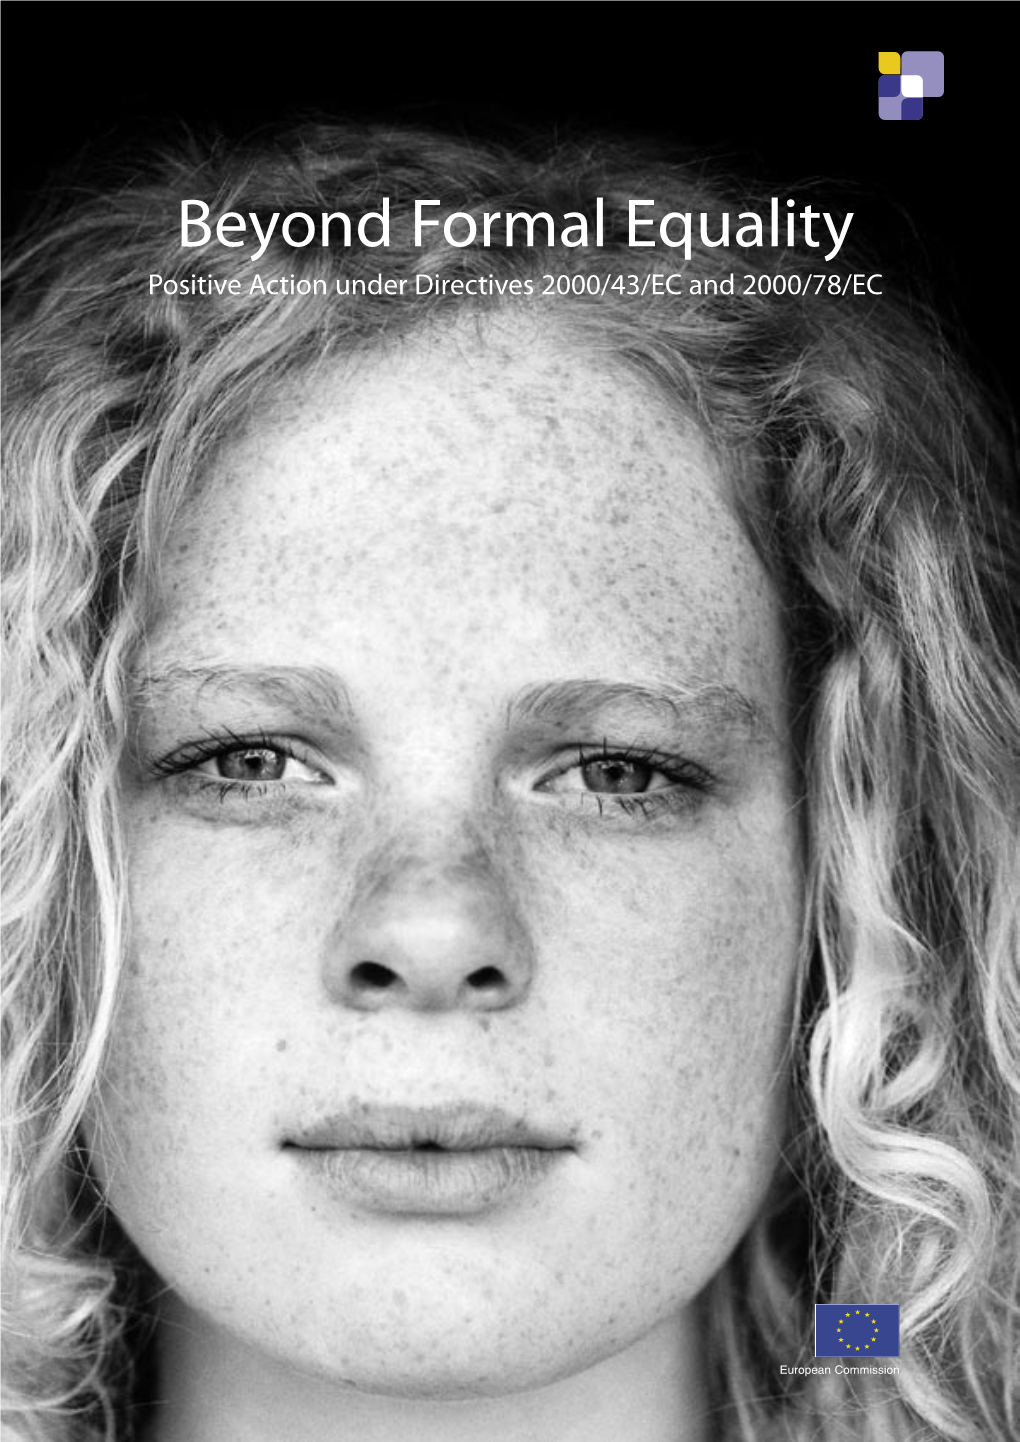 Beyond Formal Equality.Indd